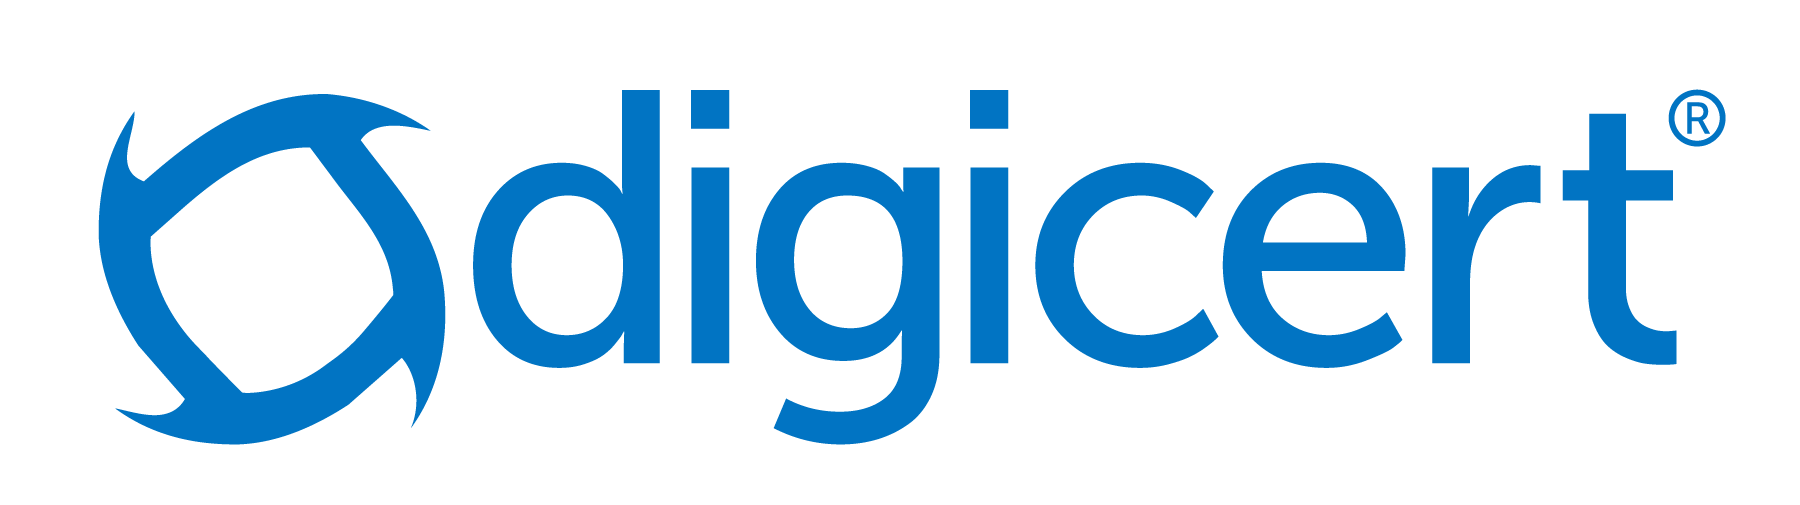 DigiCert-logo.png